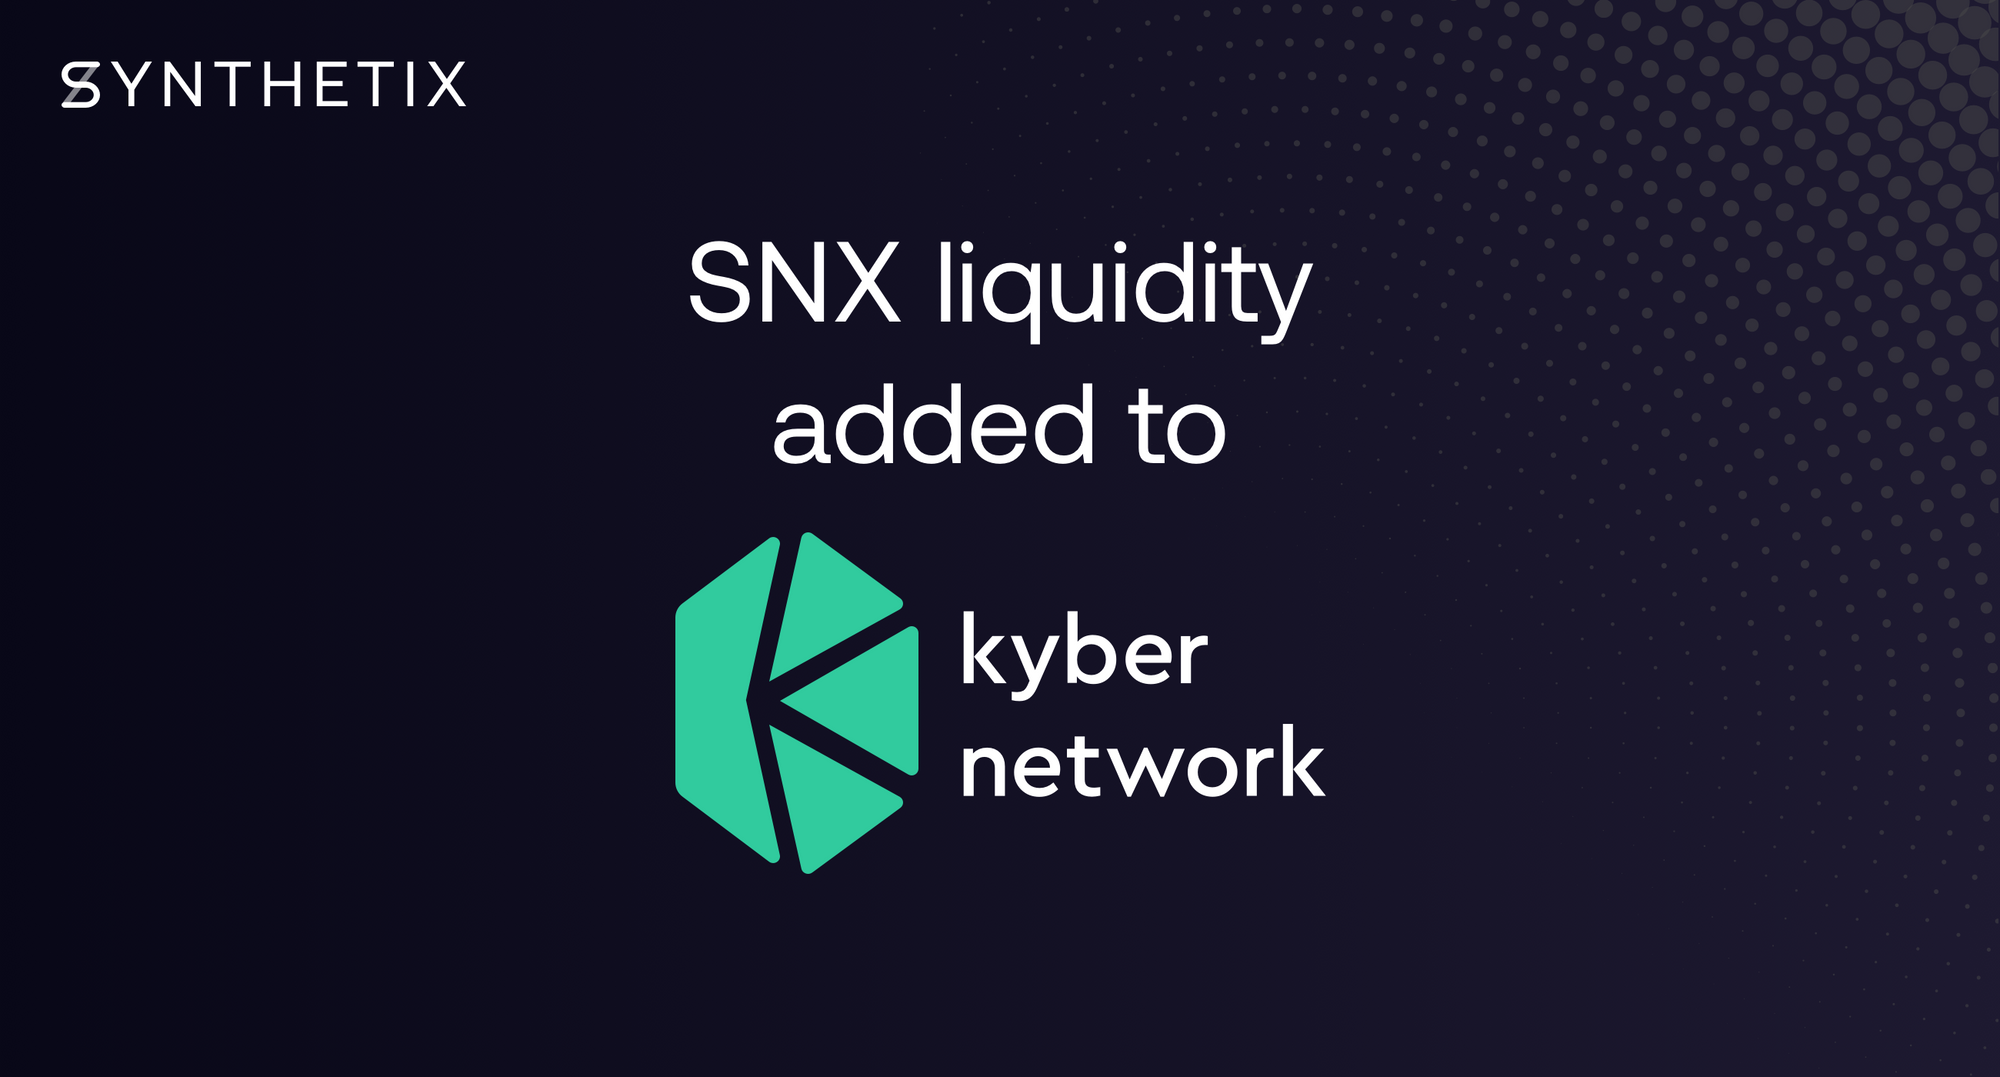 SNX liquidity has been added to KyberSwap!